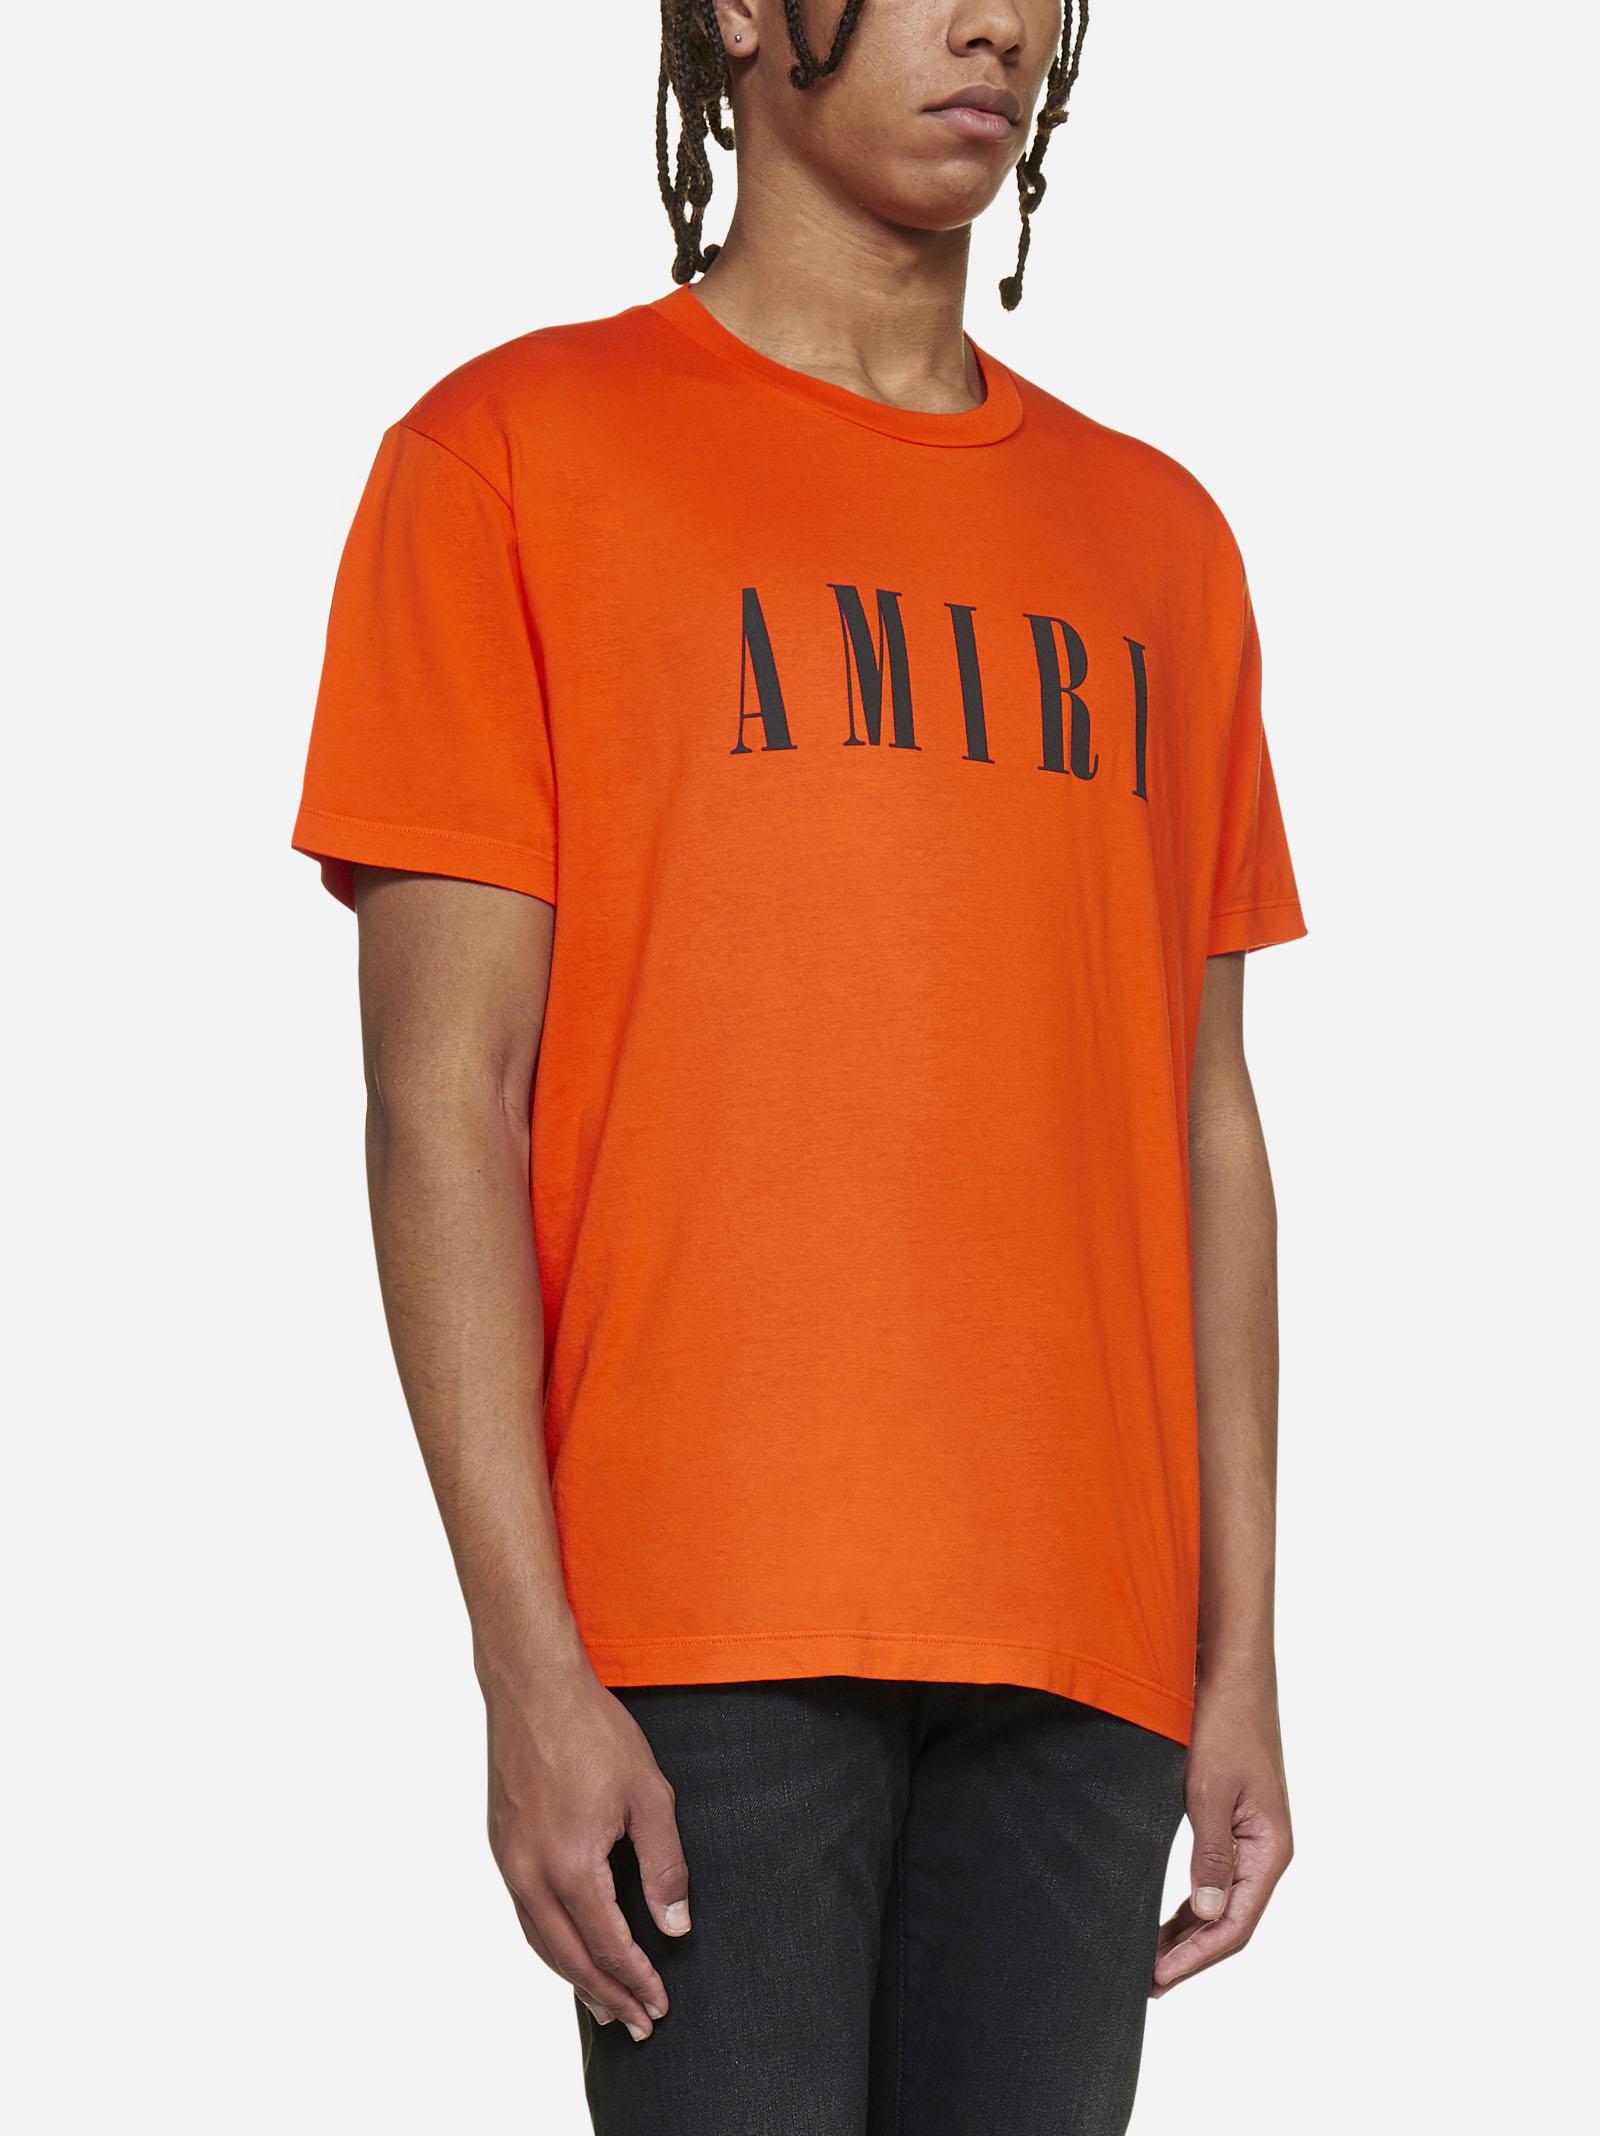 Amiri T-shirt in Orange for Men | Lyst